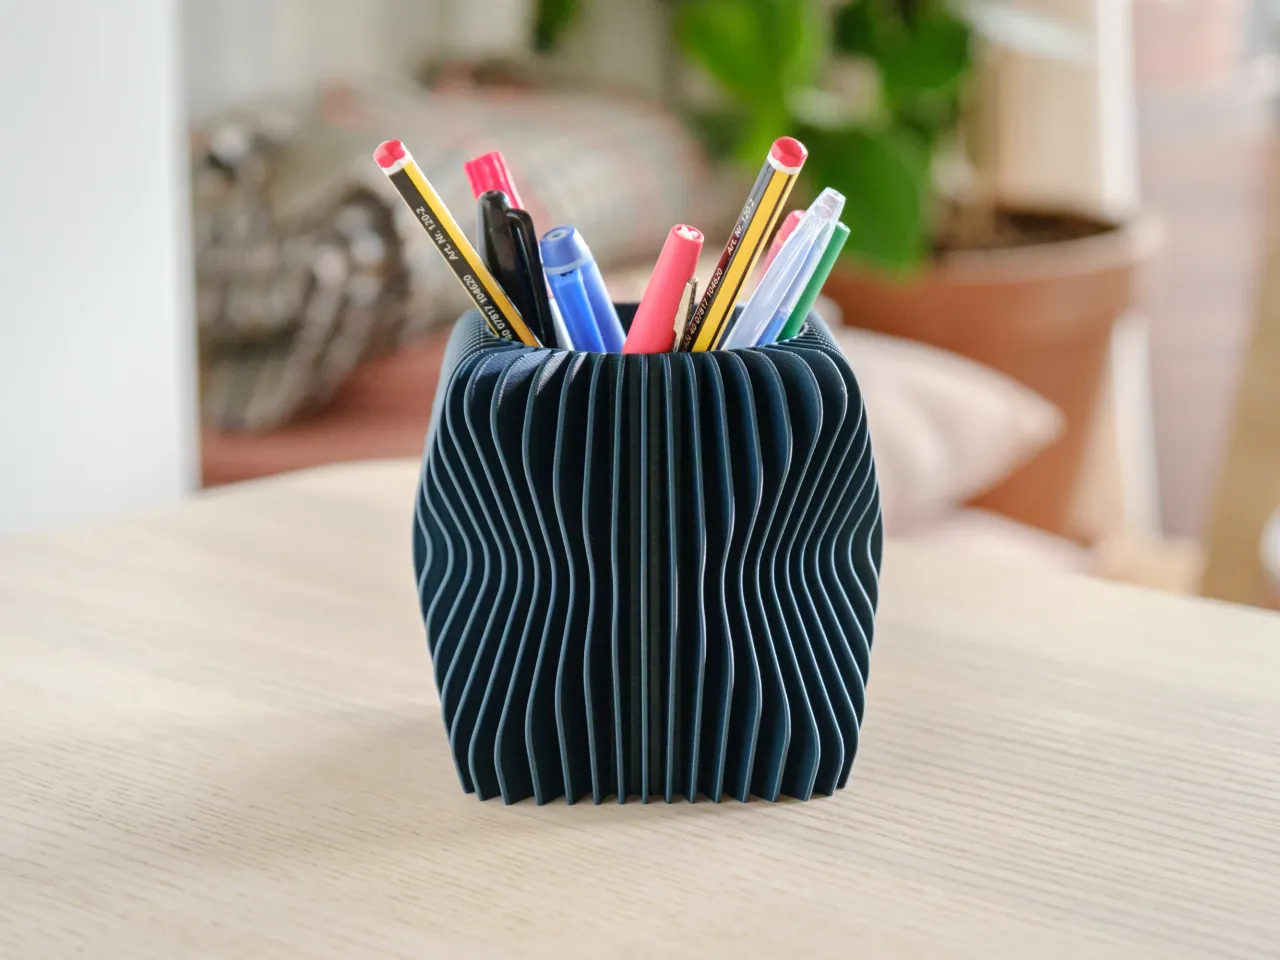 Wavy Pencil Holder - Vase mode by SNASA